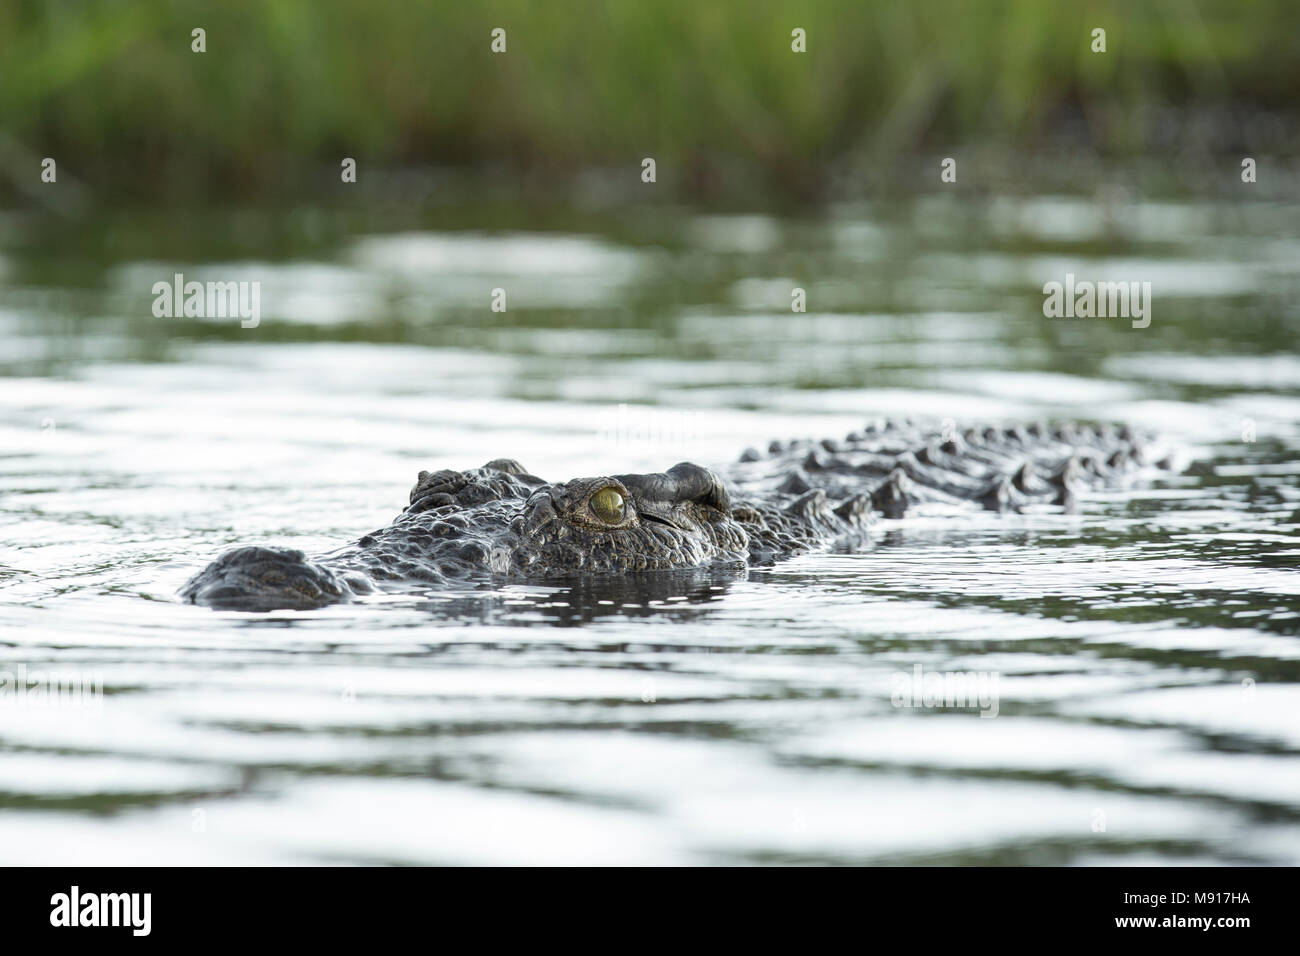 A Crocodile swimming in the Chobe River, Chobe National Park, Botswana. Stock Photo